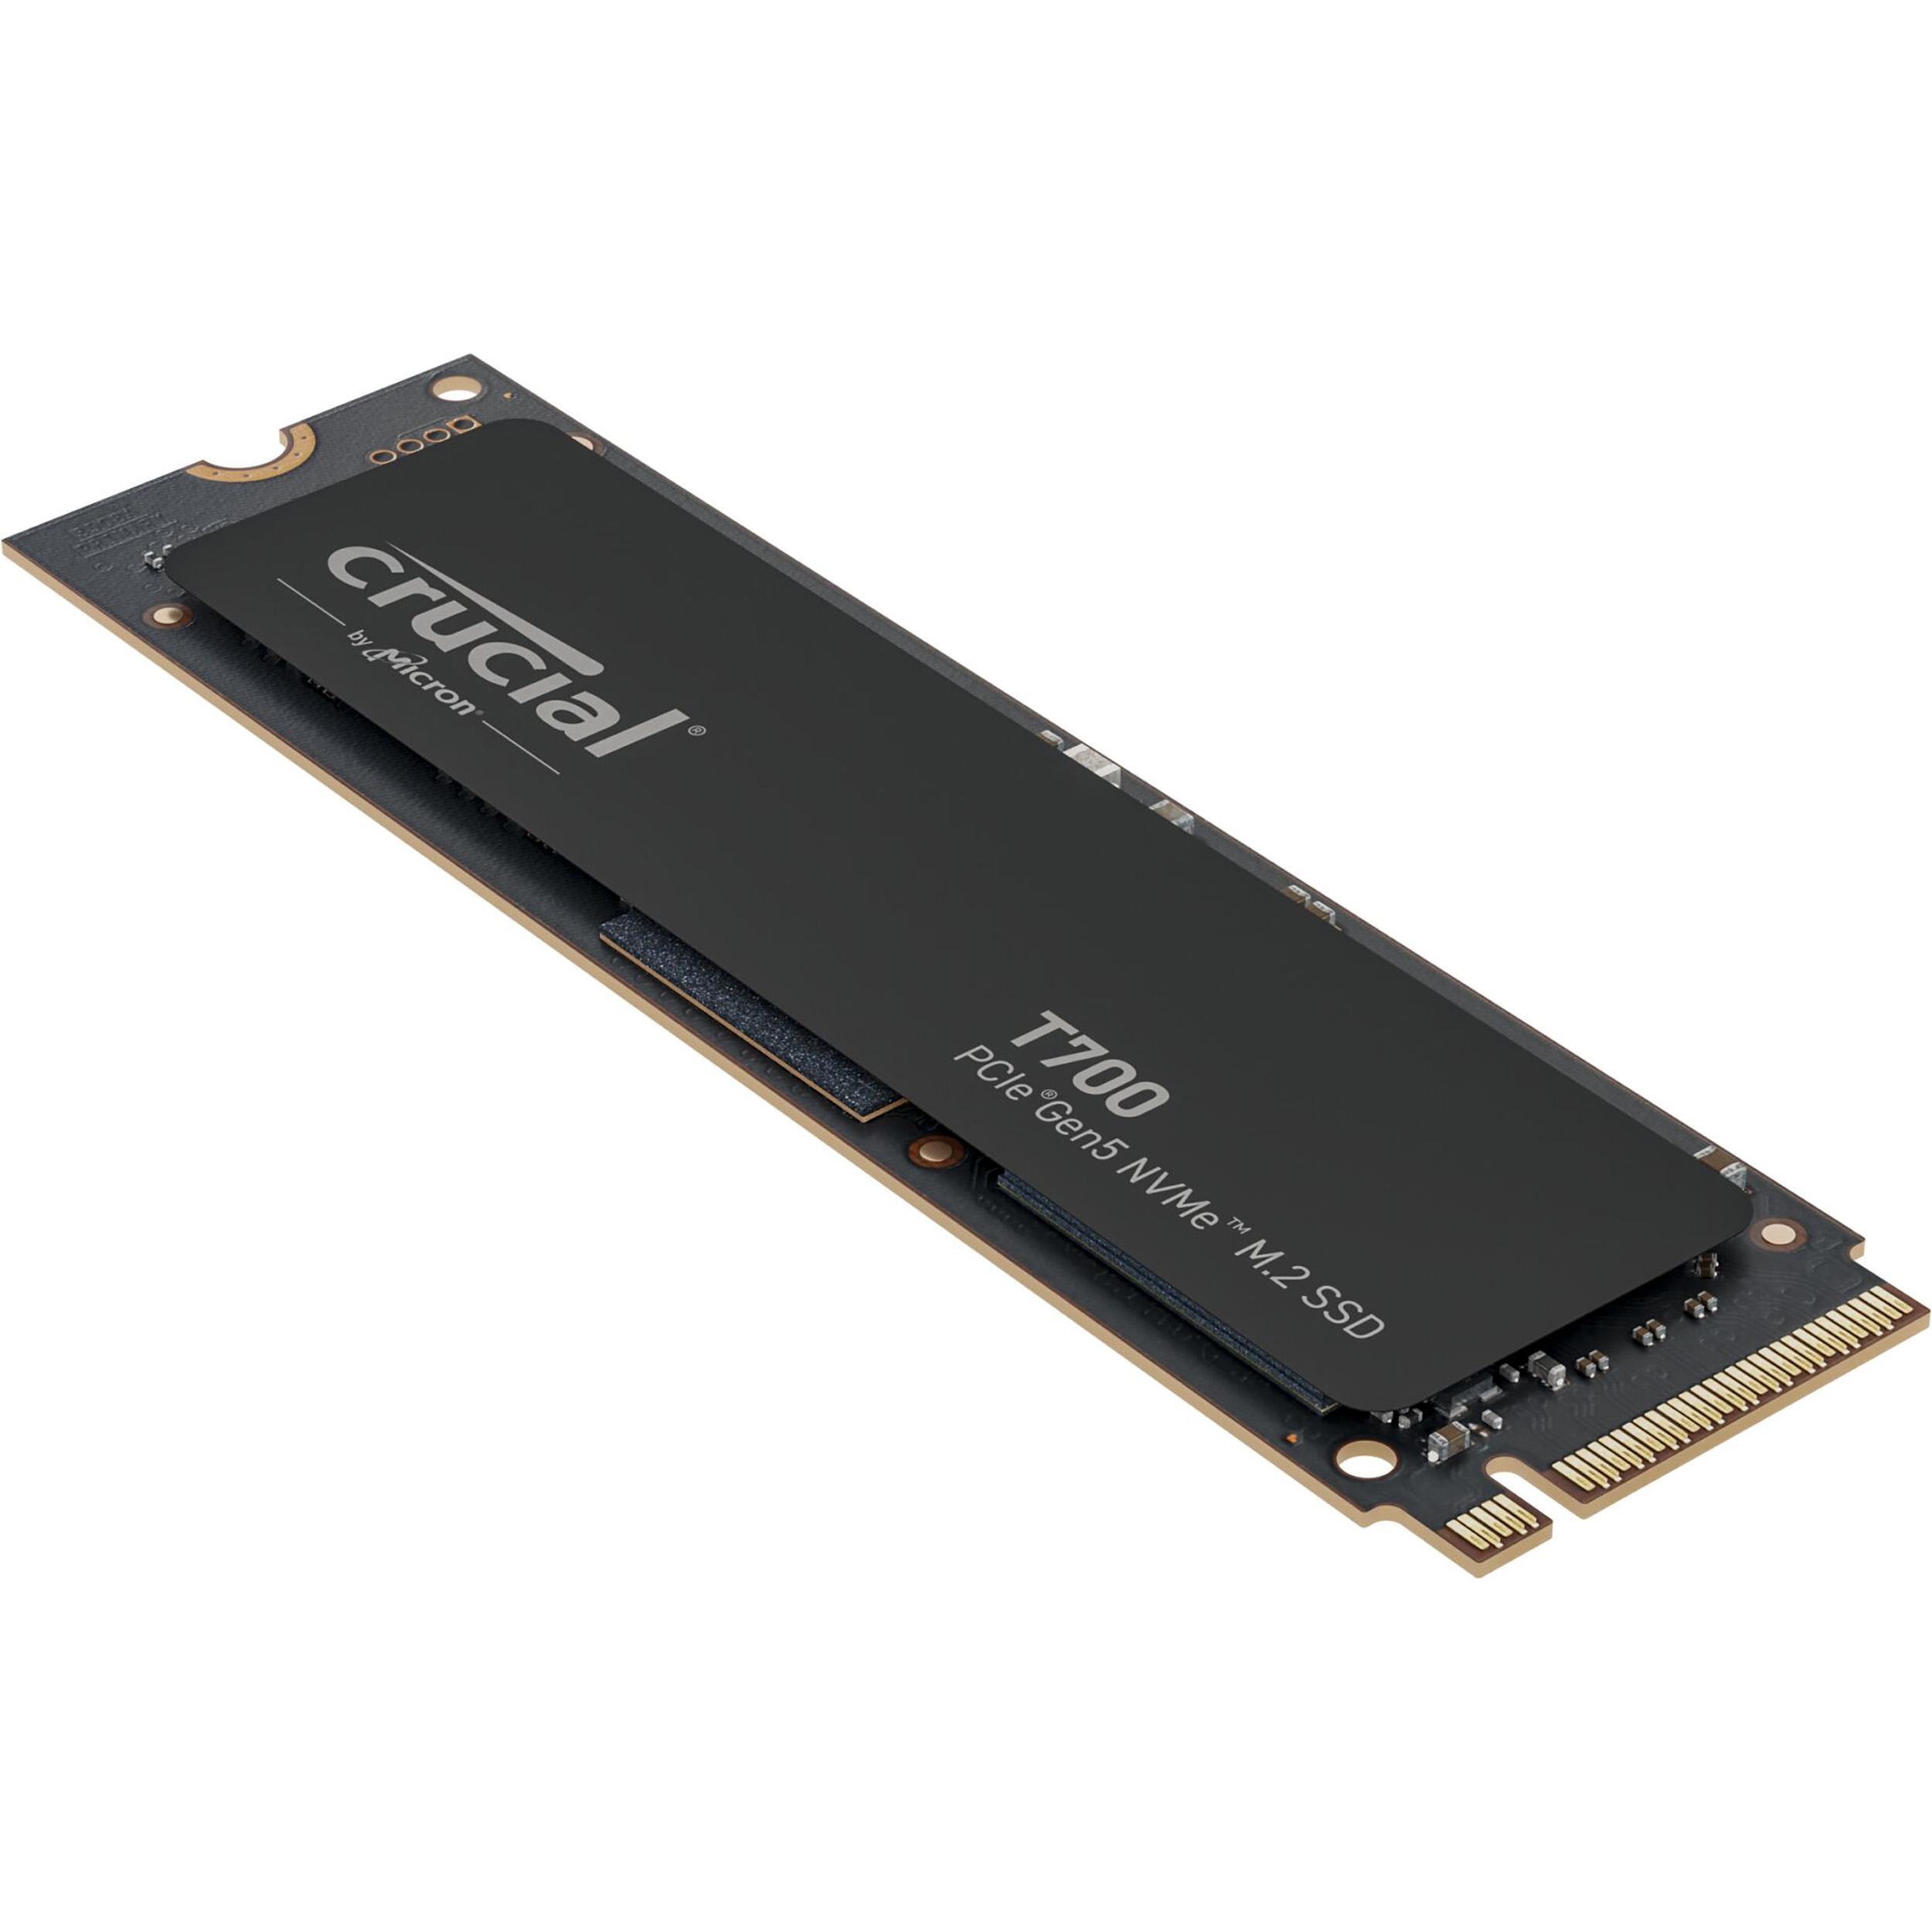 CRUCIAL T700 PCIe Gen5 NVMe via TB SSD, NVMe, intern M.2 SSD 2